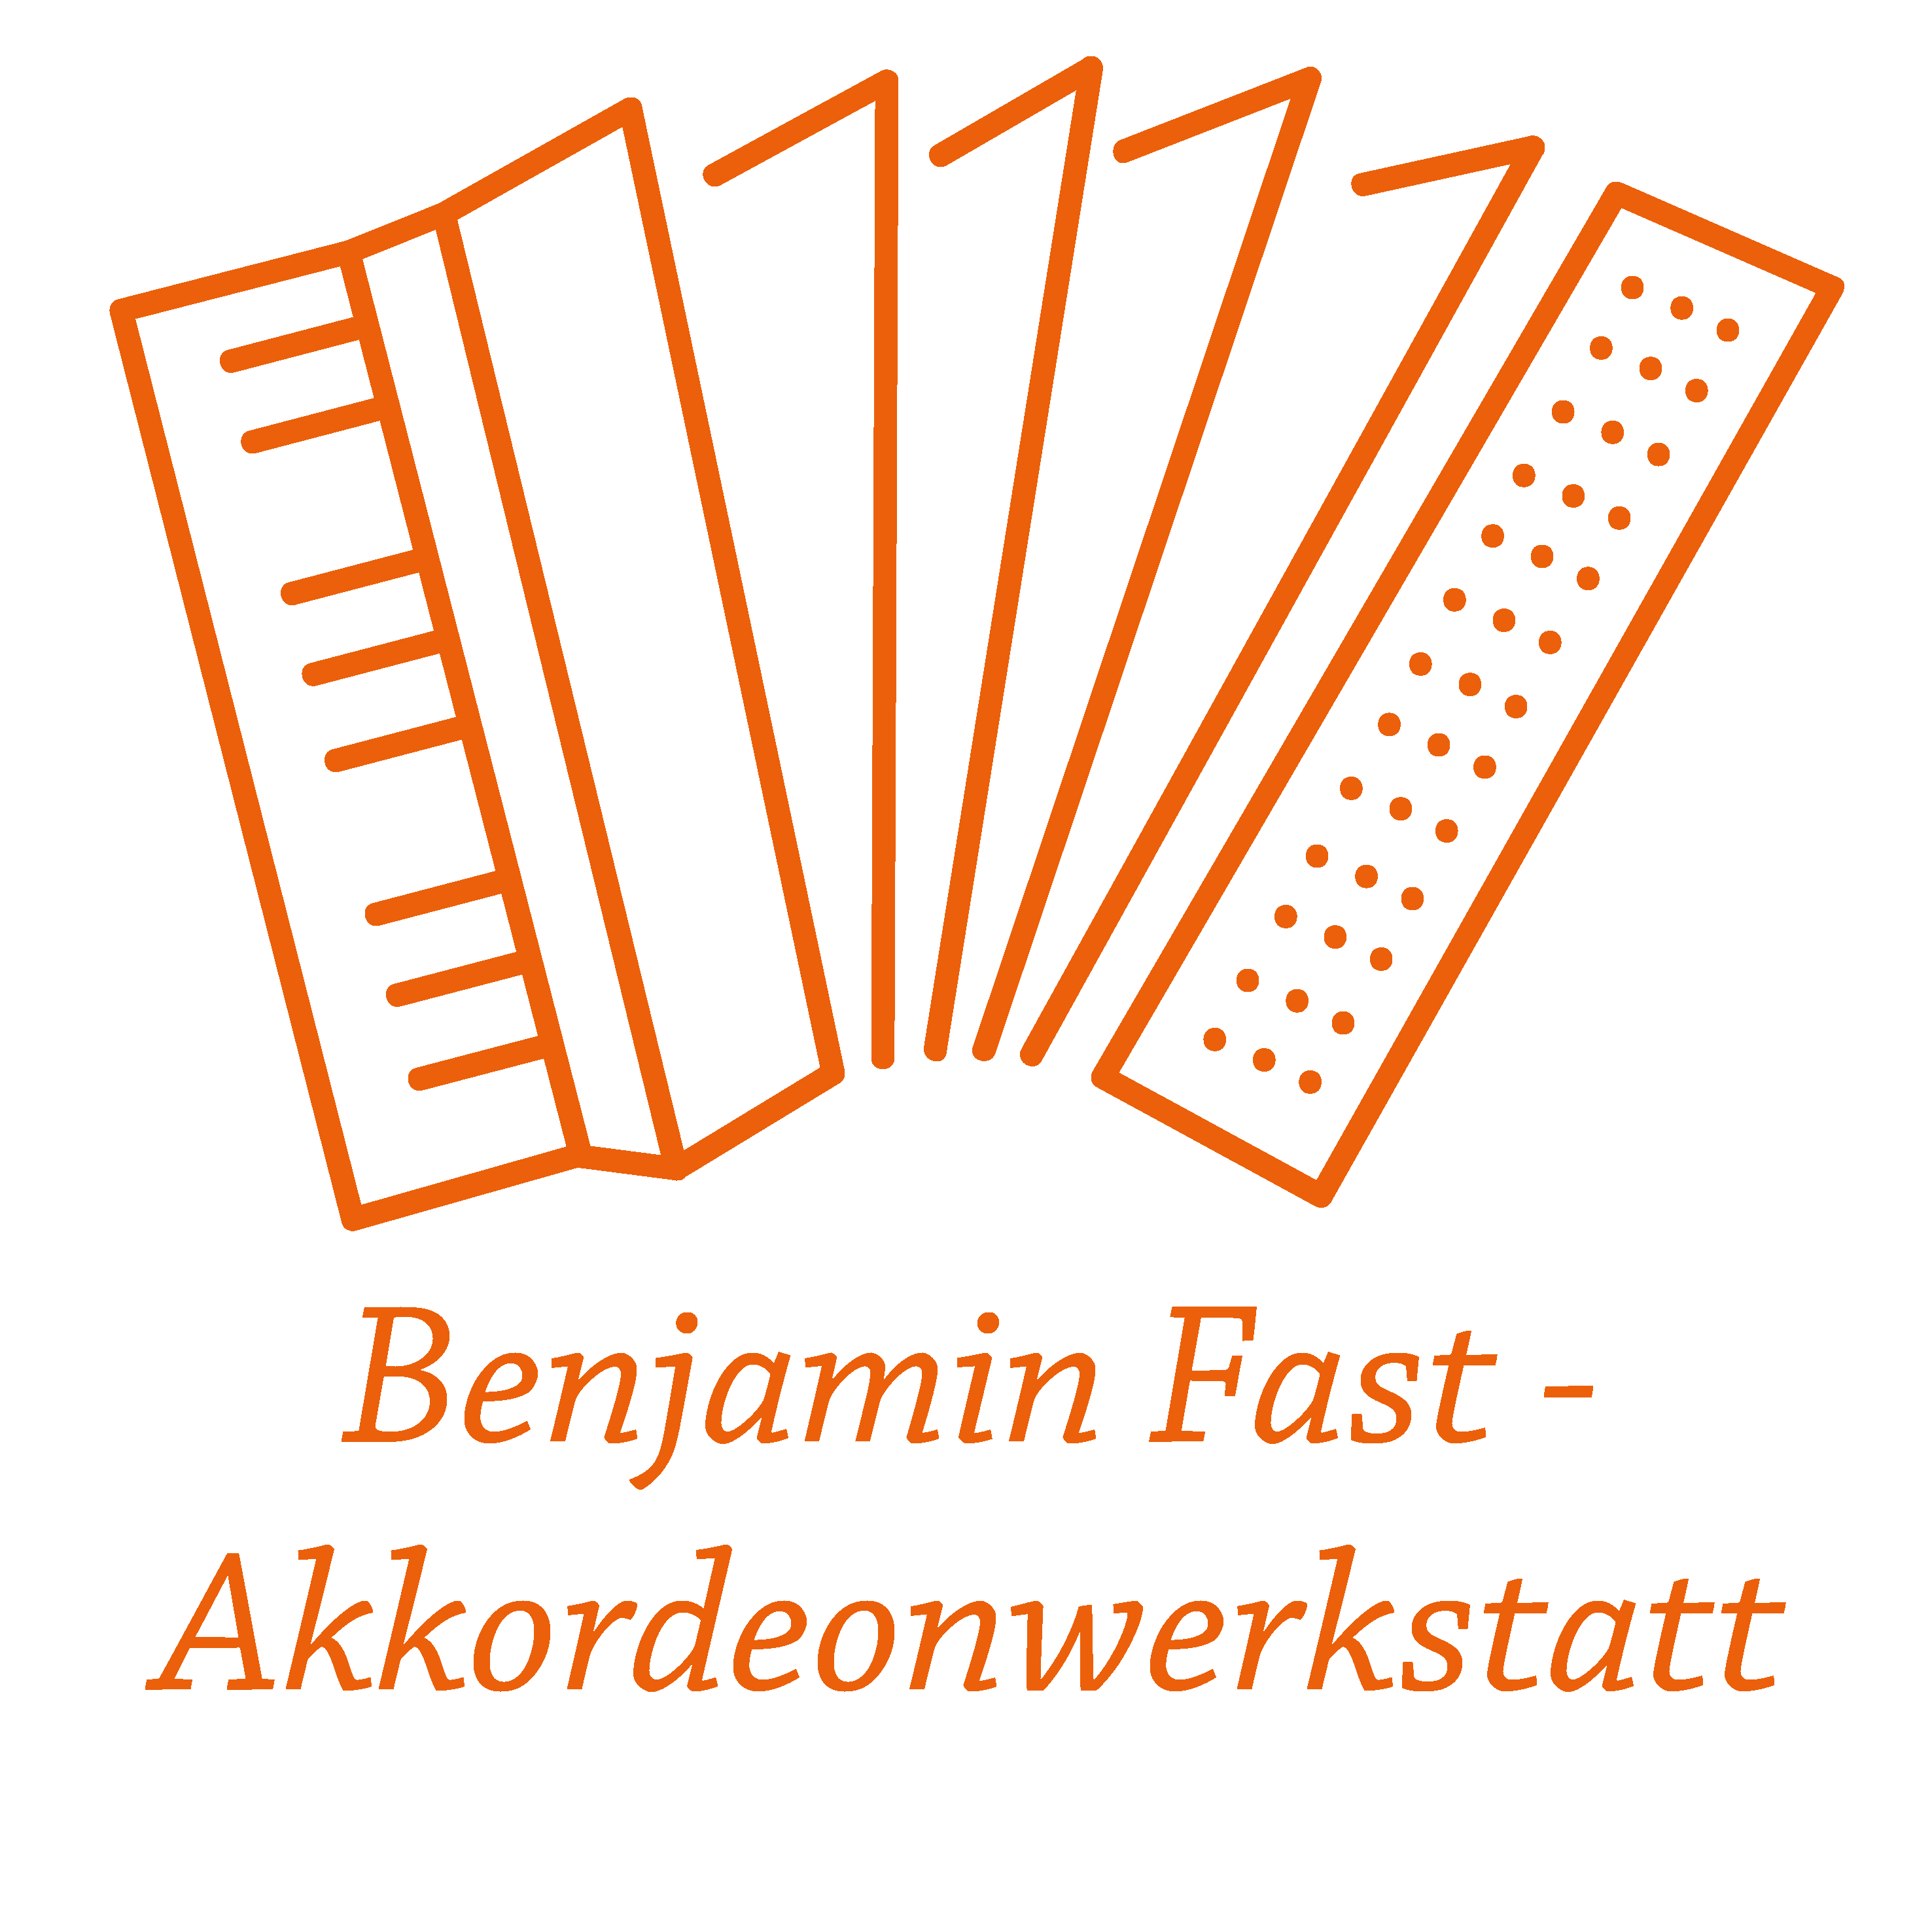 Benjamin Fast - Akkordeonwerkstatt in Redwitz an der Rodach